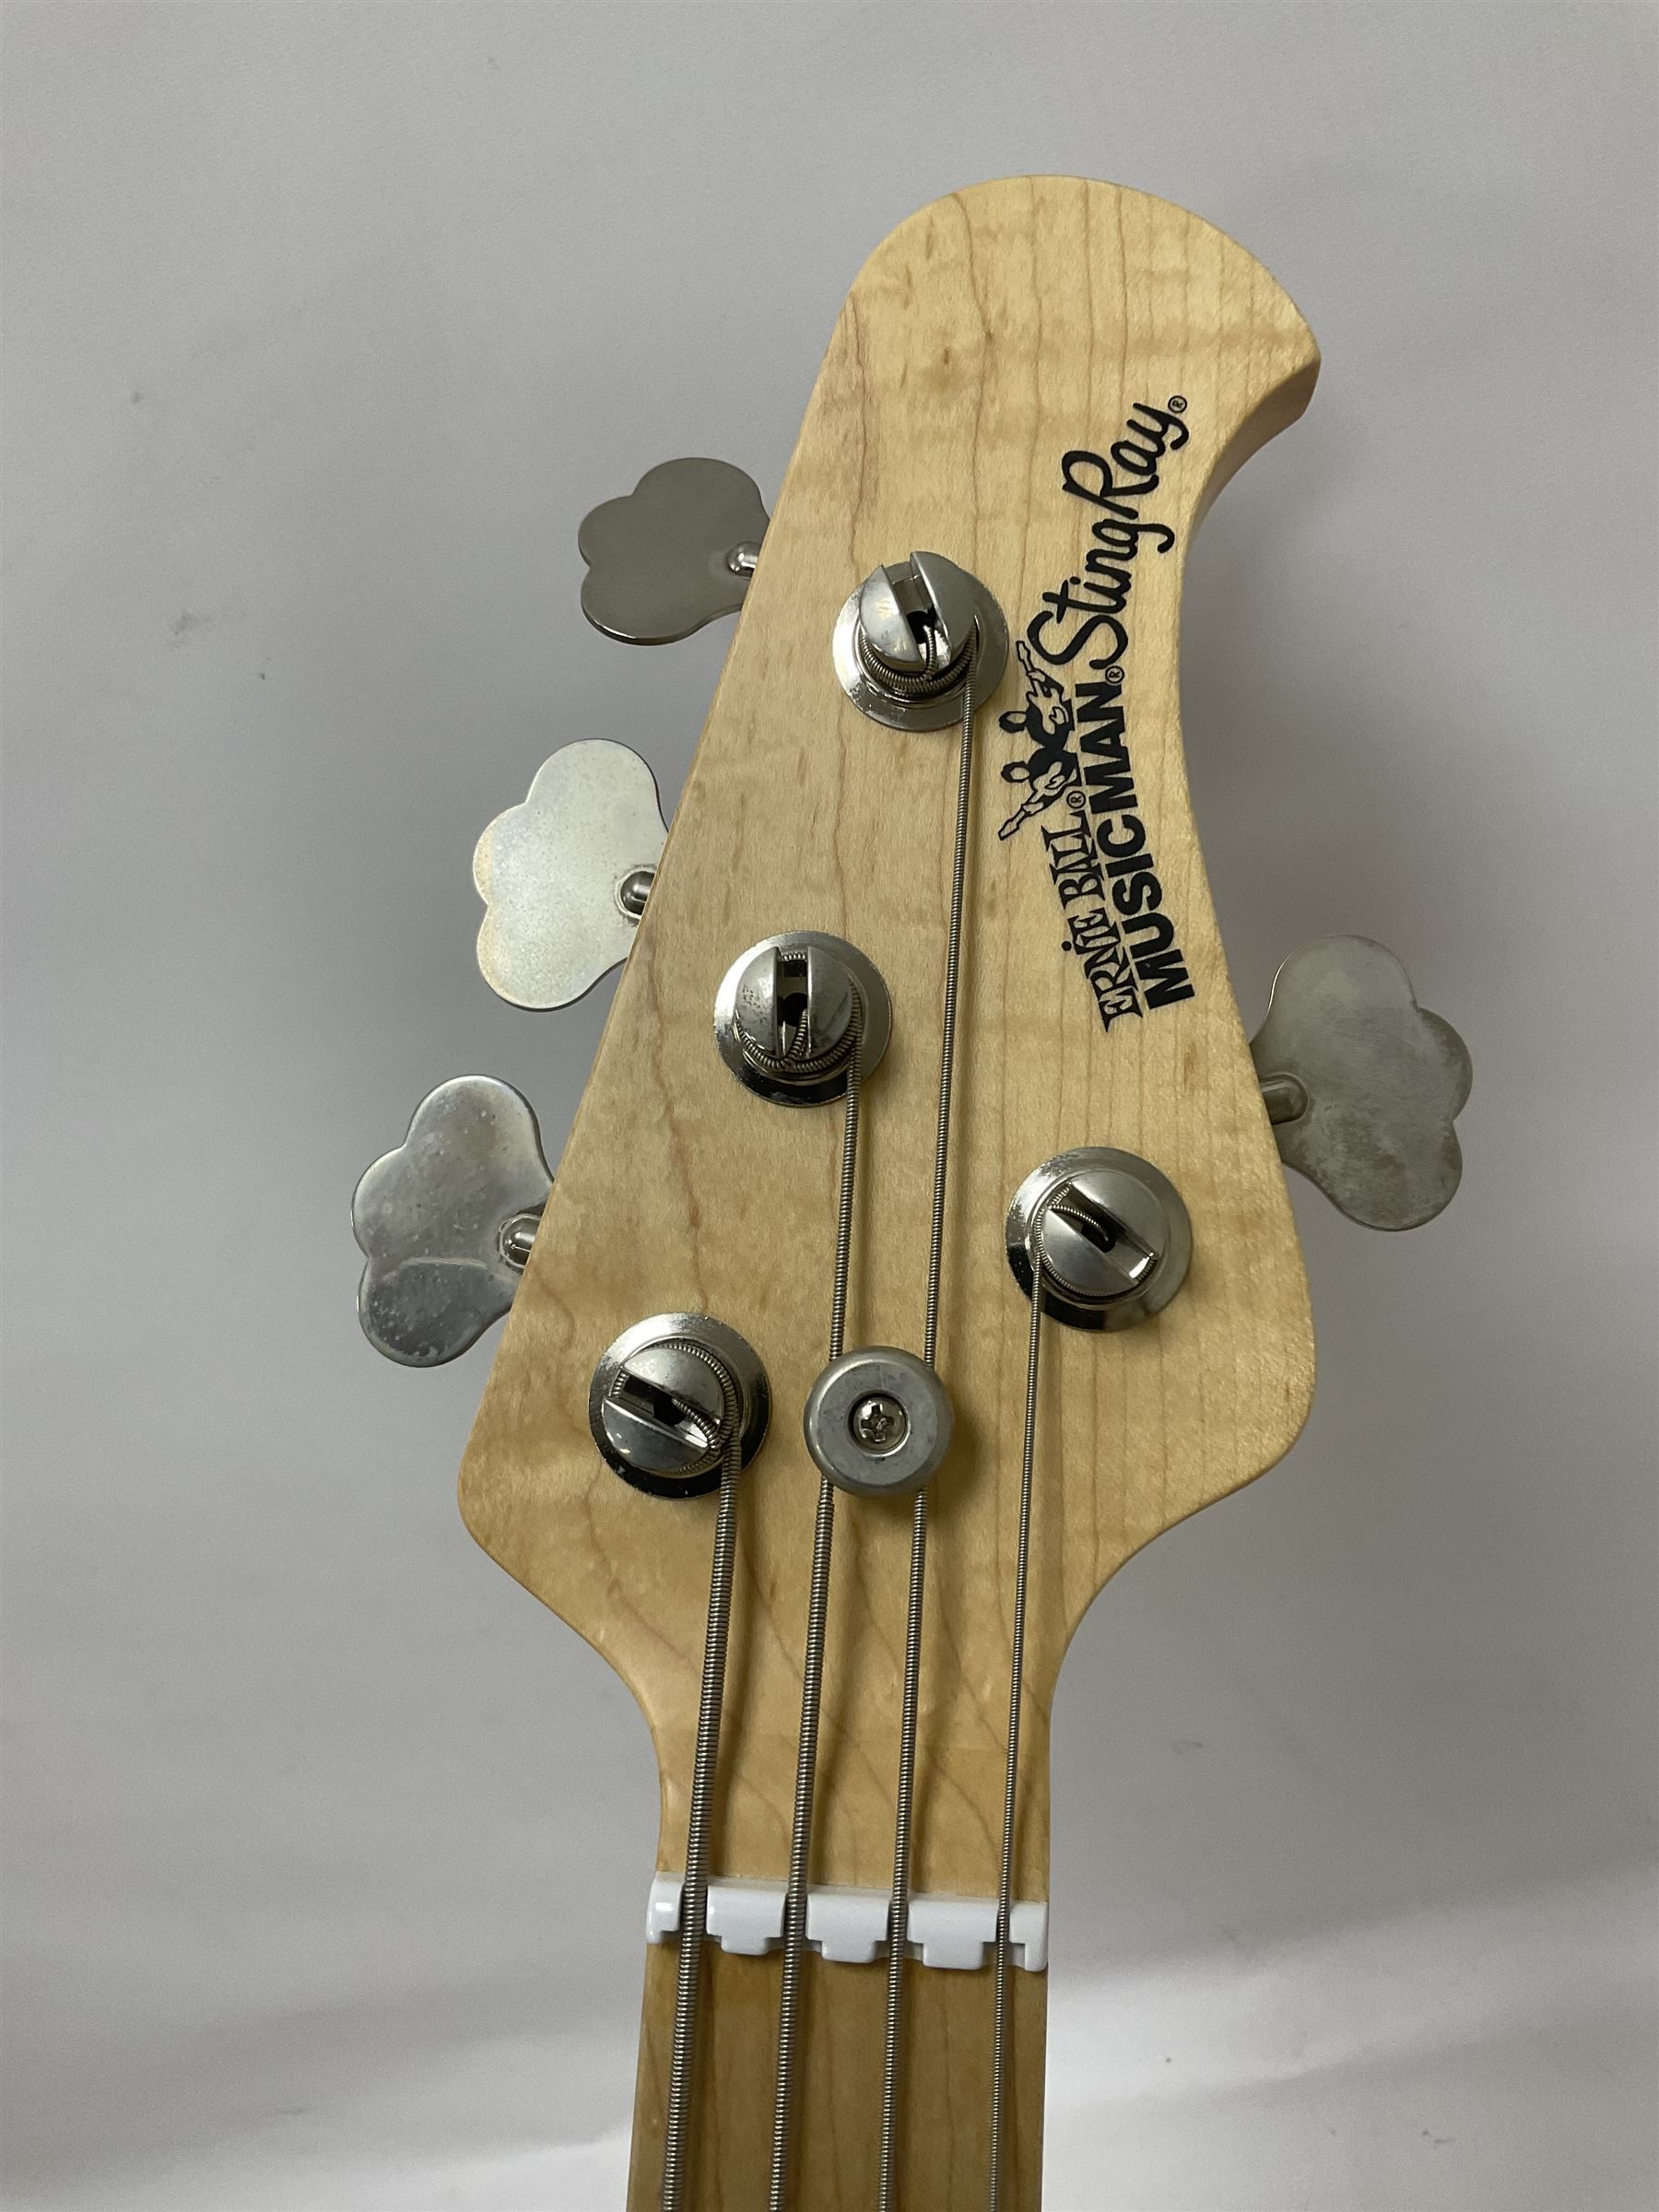 Ernie Ball Music Man Sting Ray 4 string bass guitar - Image 15 of 24